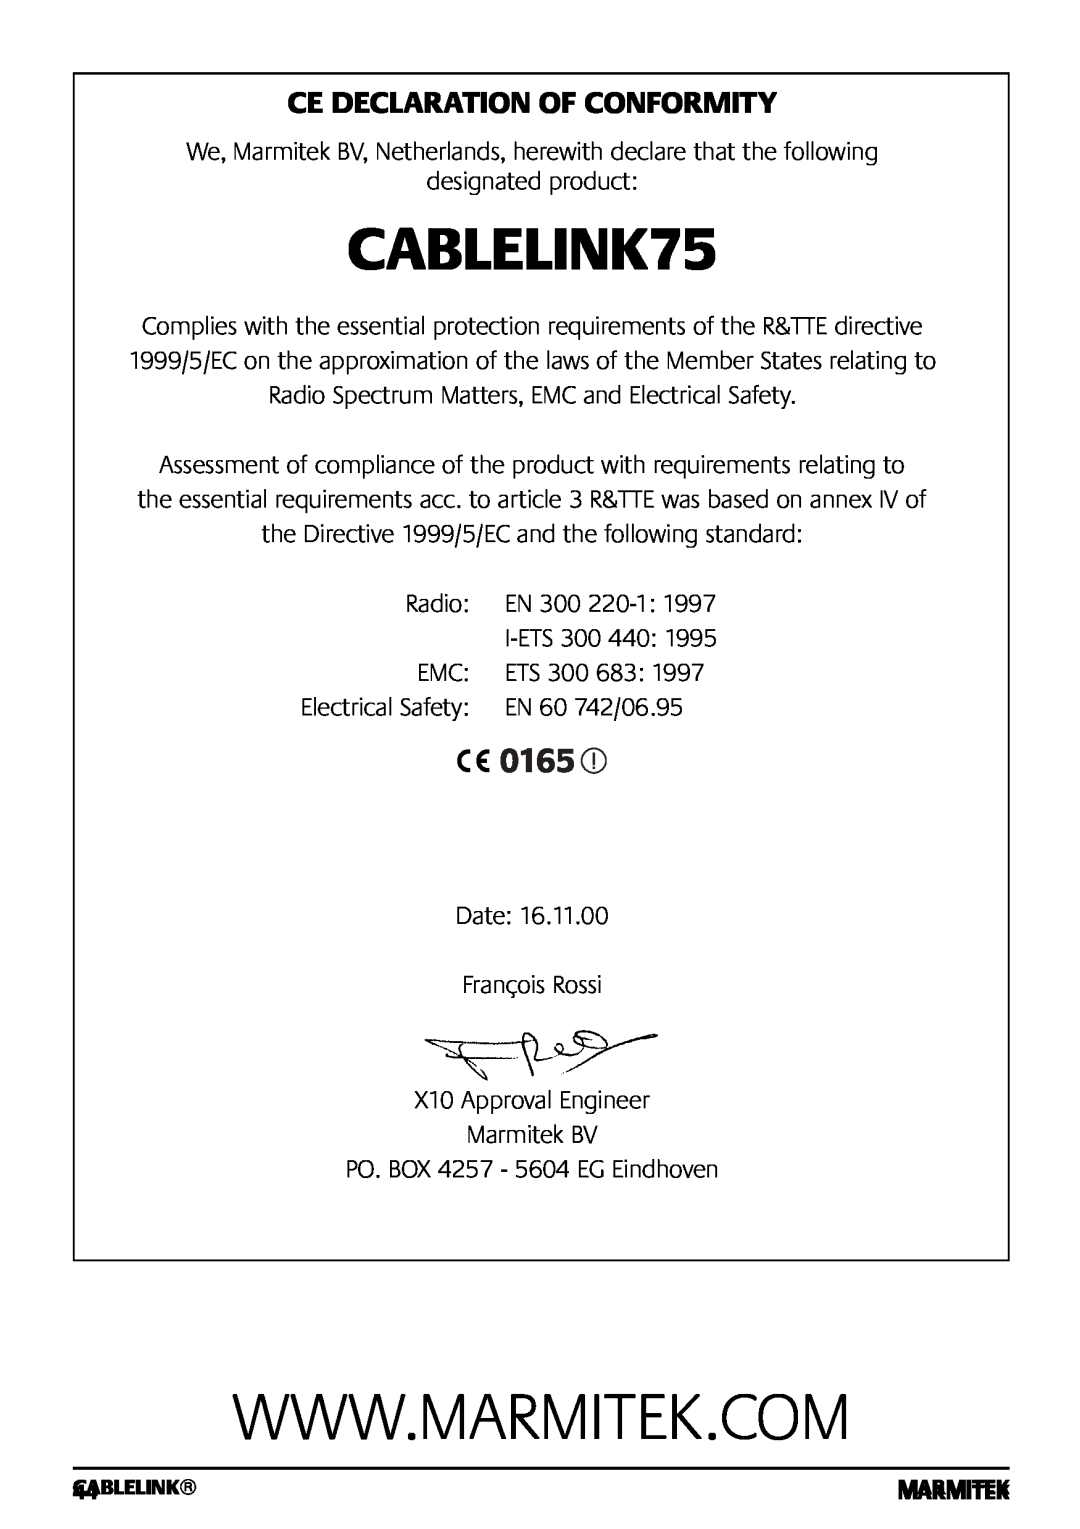 Marmitek 121101 owner manual CABLELINK75, Ce Declaration Of Conformity 